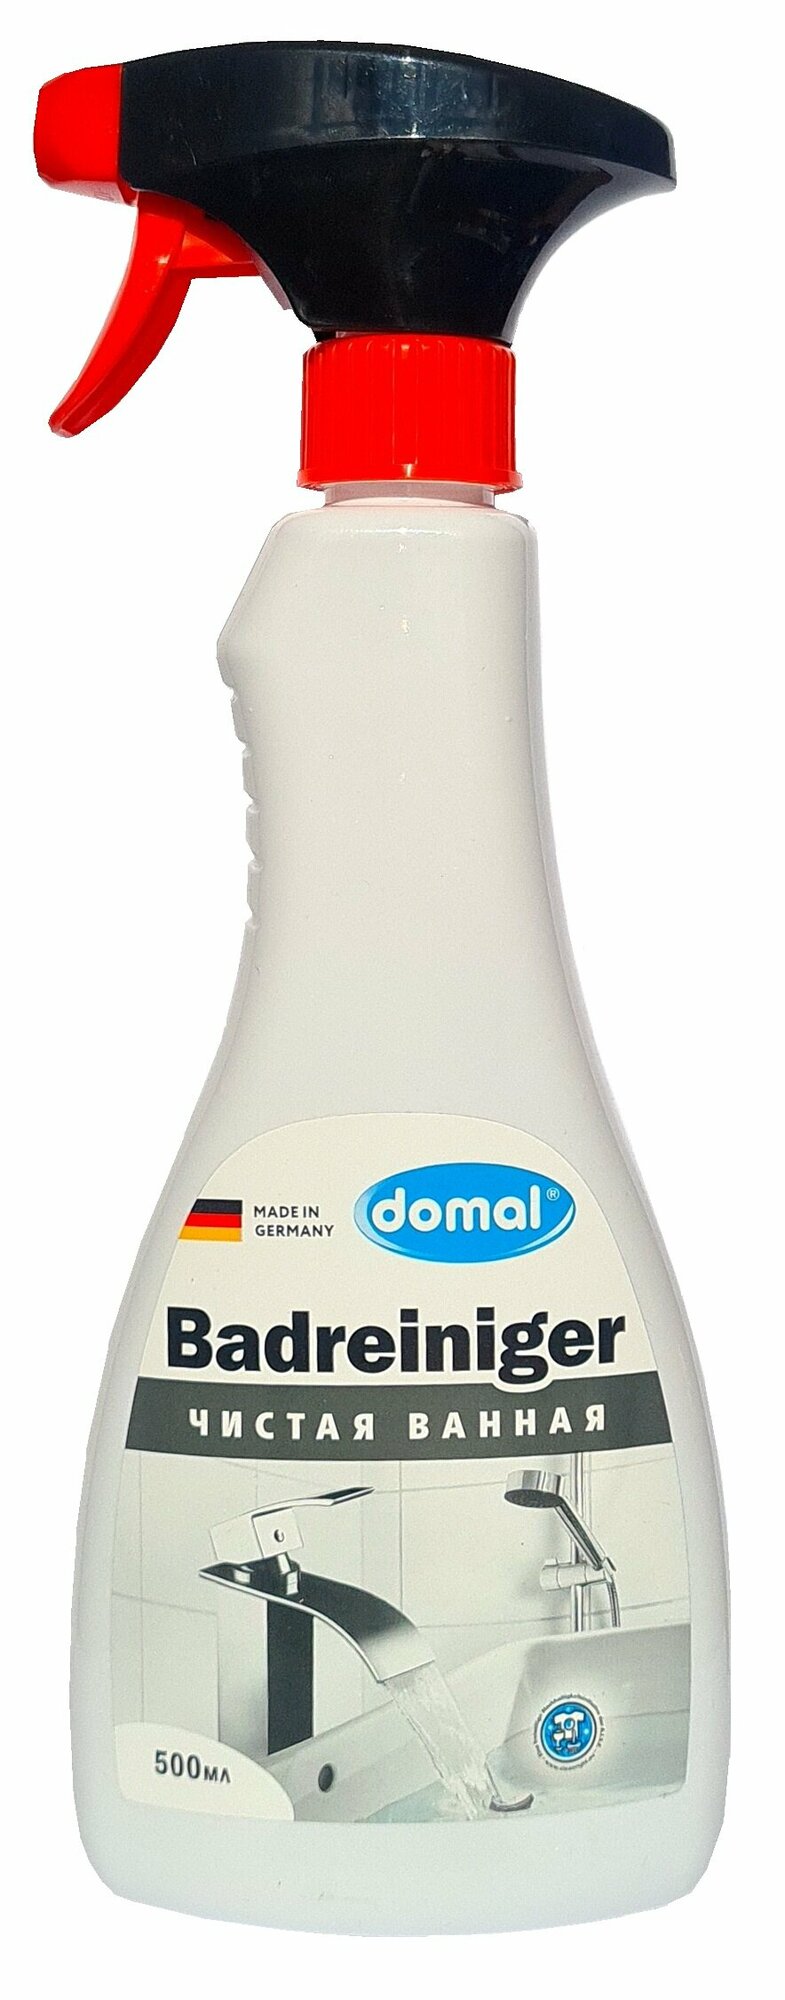 Domal (Домаль) Средство для чистки ванны и сантехники, 500 мл (Германия)